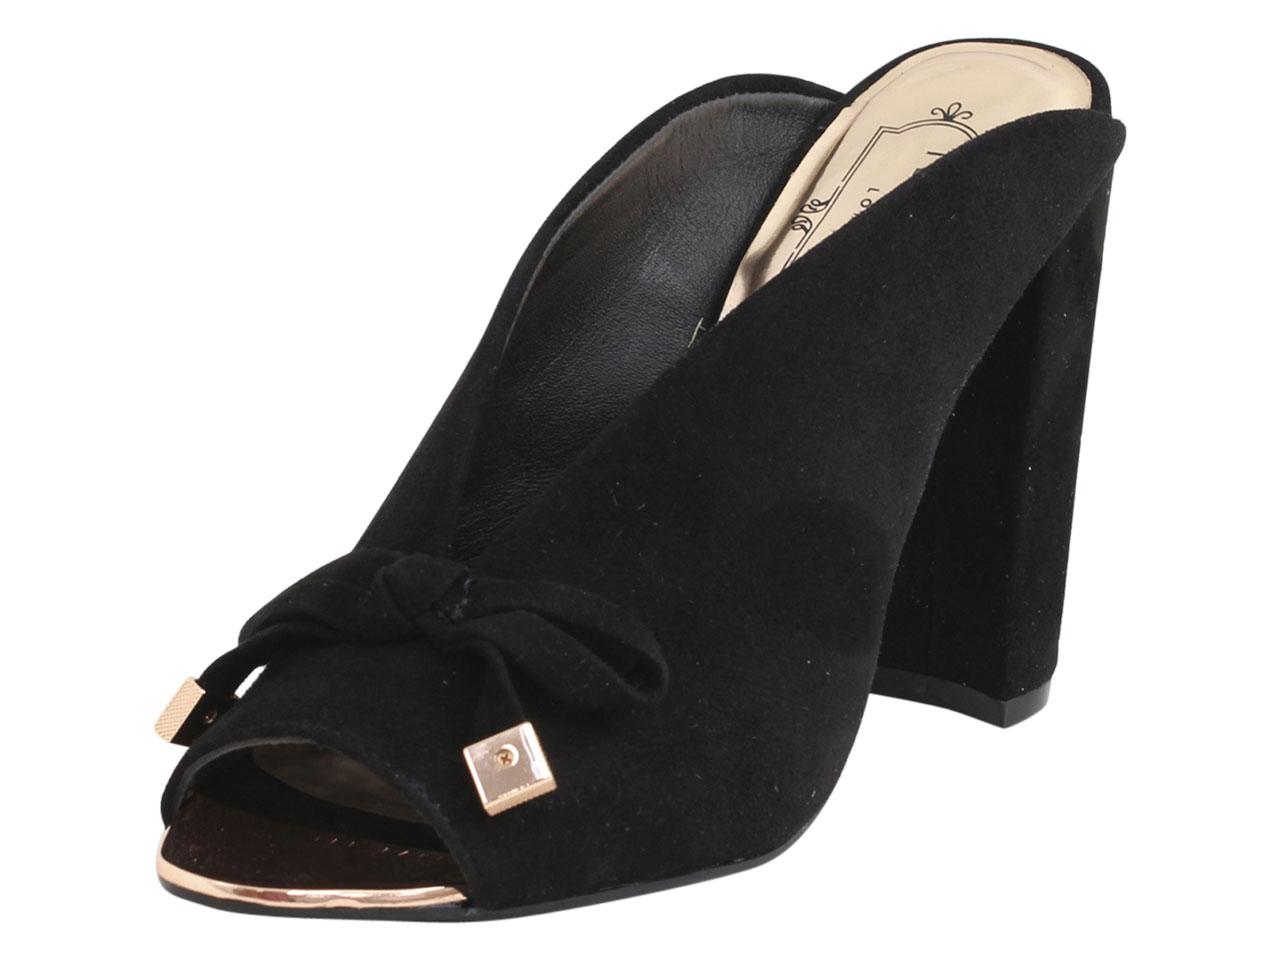 Ted Baker Women's Marinax Pumps Heels Shoes - Black - 8 B(M) US